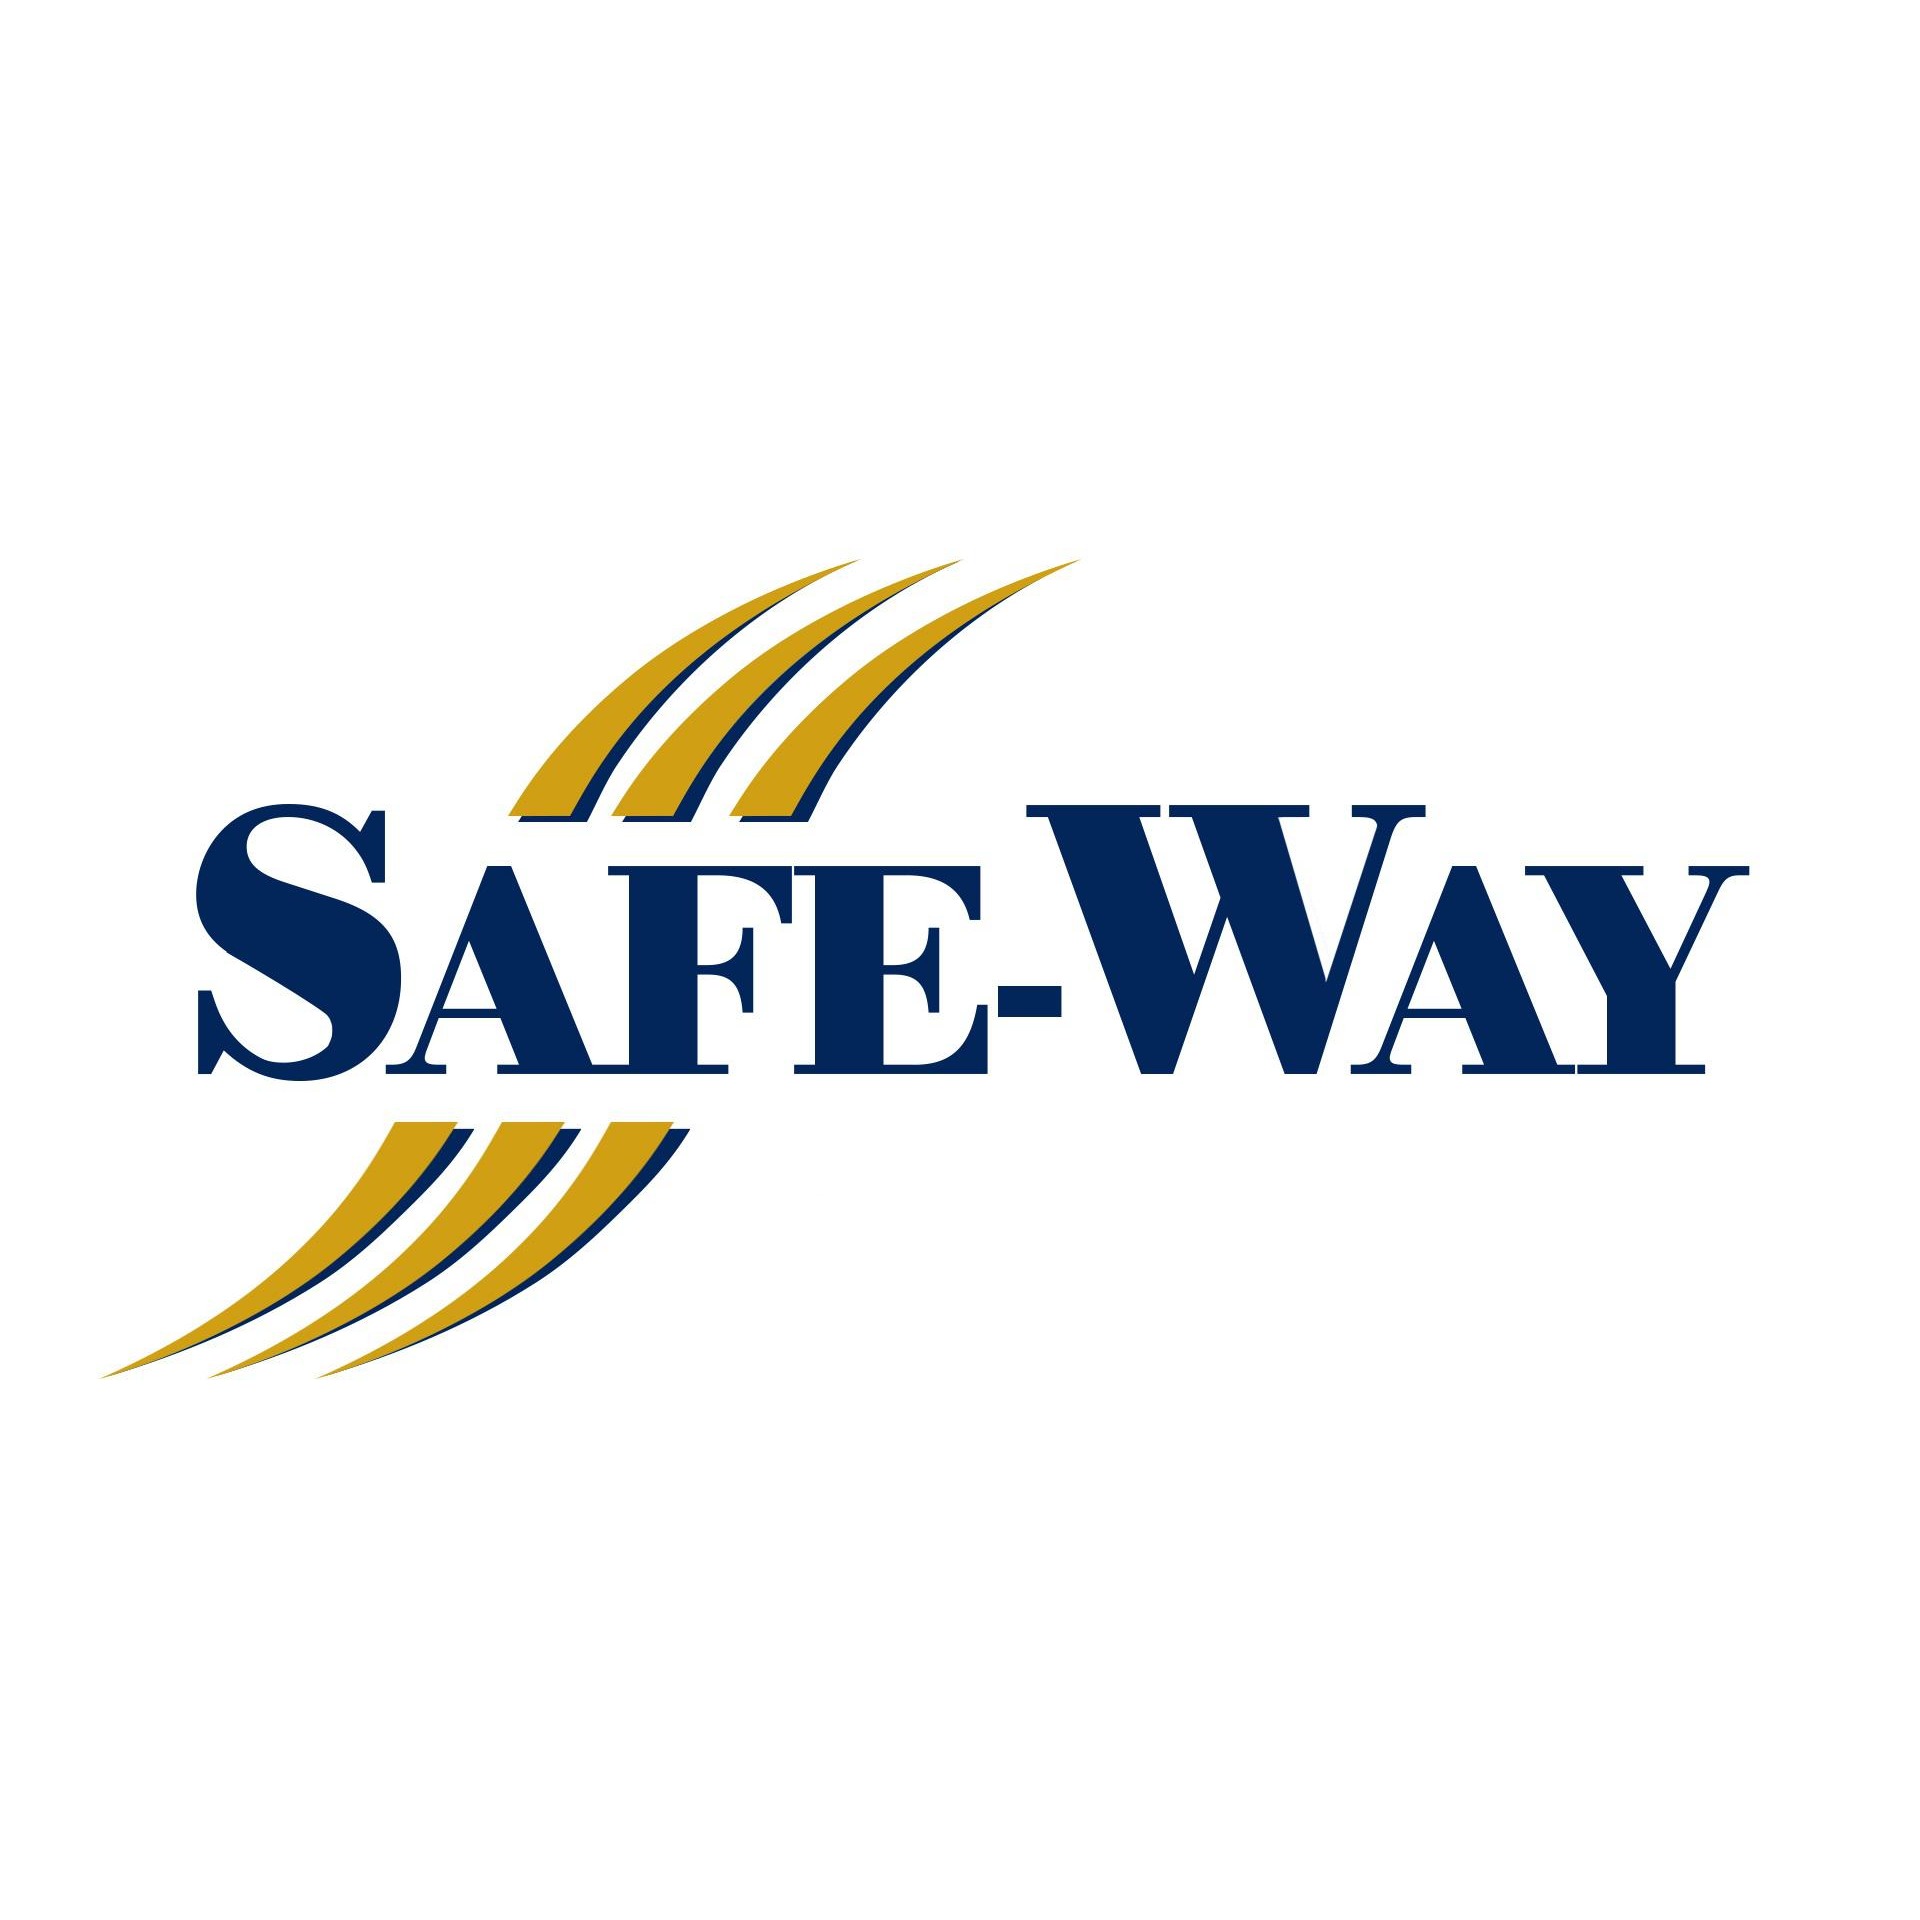 Safe-Way - Johnson City, TN 37604 - (423)283-4522 | ShowMeLocal.com